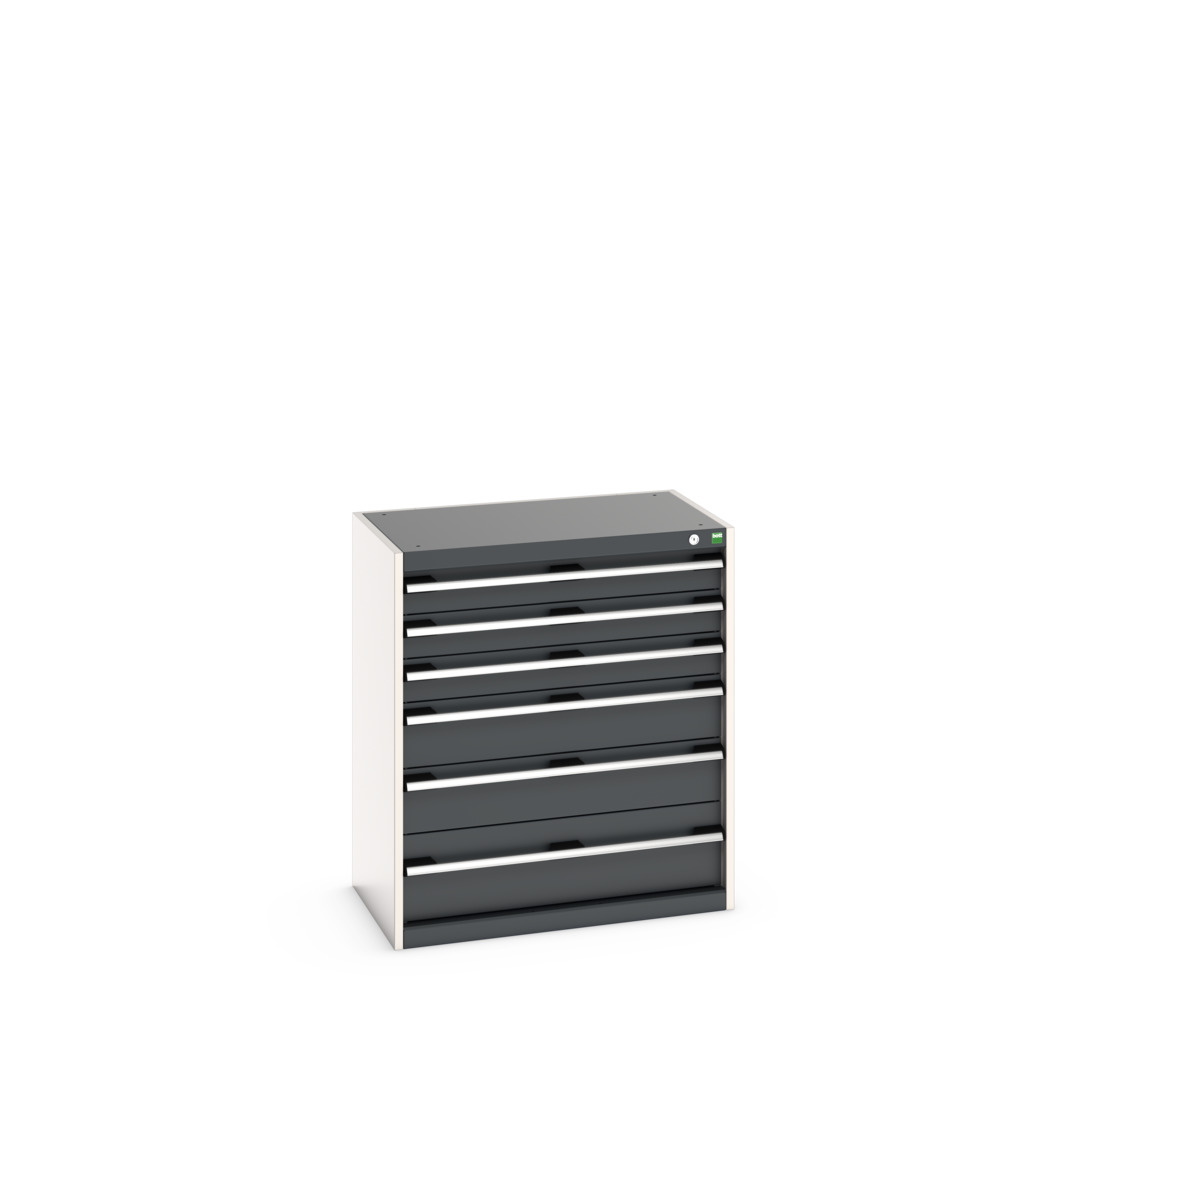 40012087. - cubio drawer cabinet